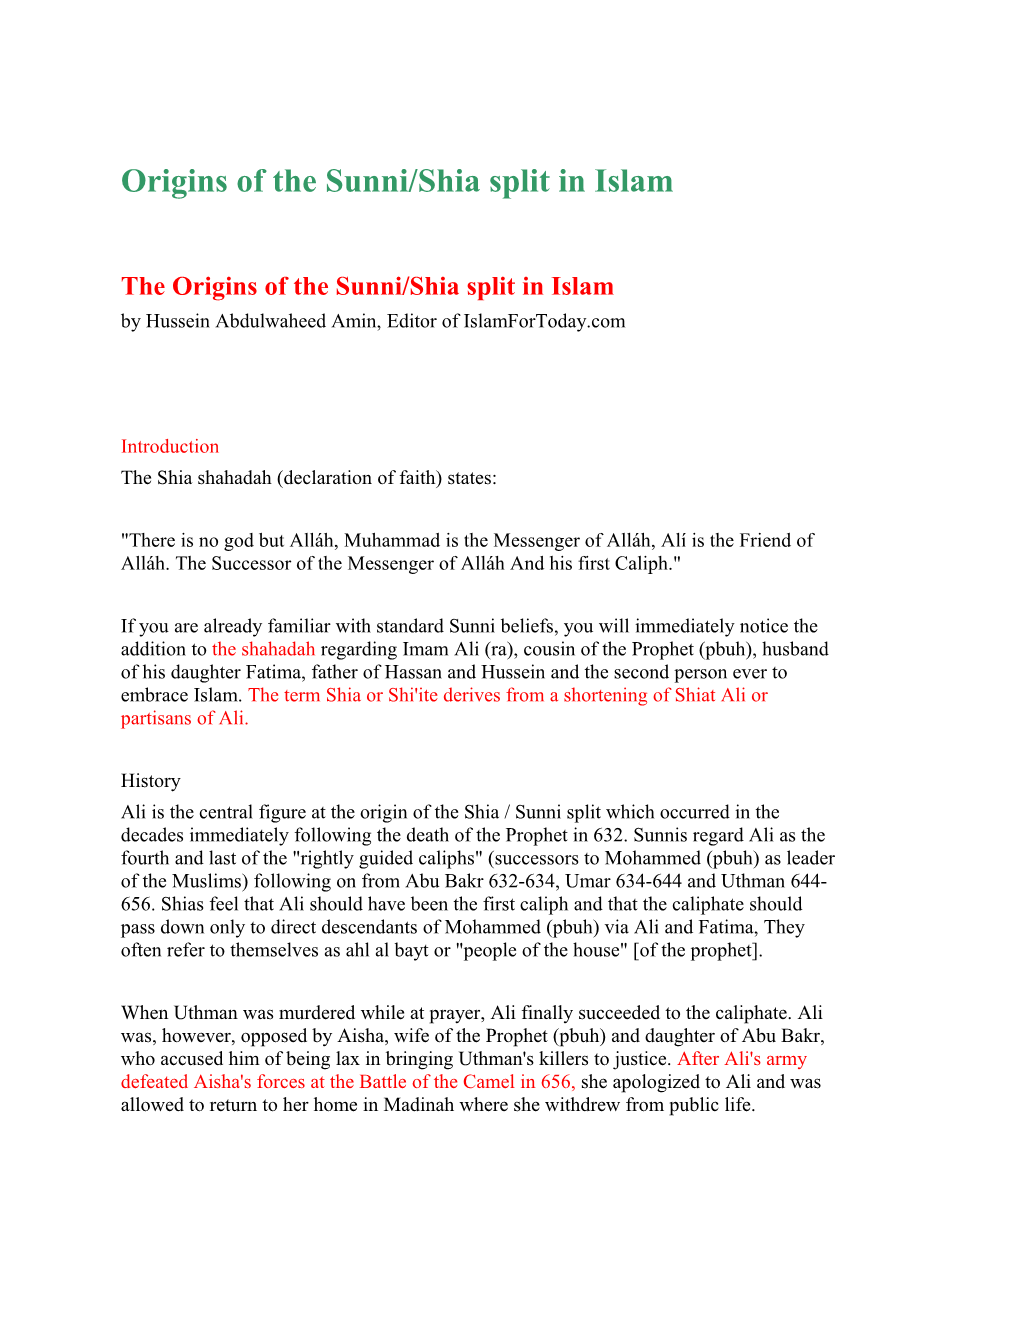 Origins of the Sunni/Shia Split in Islam